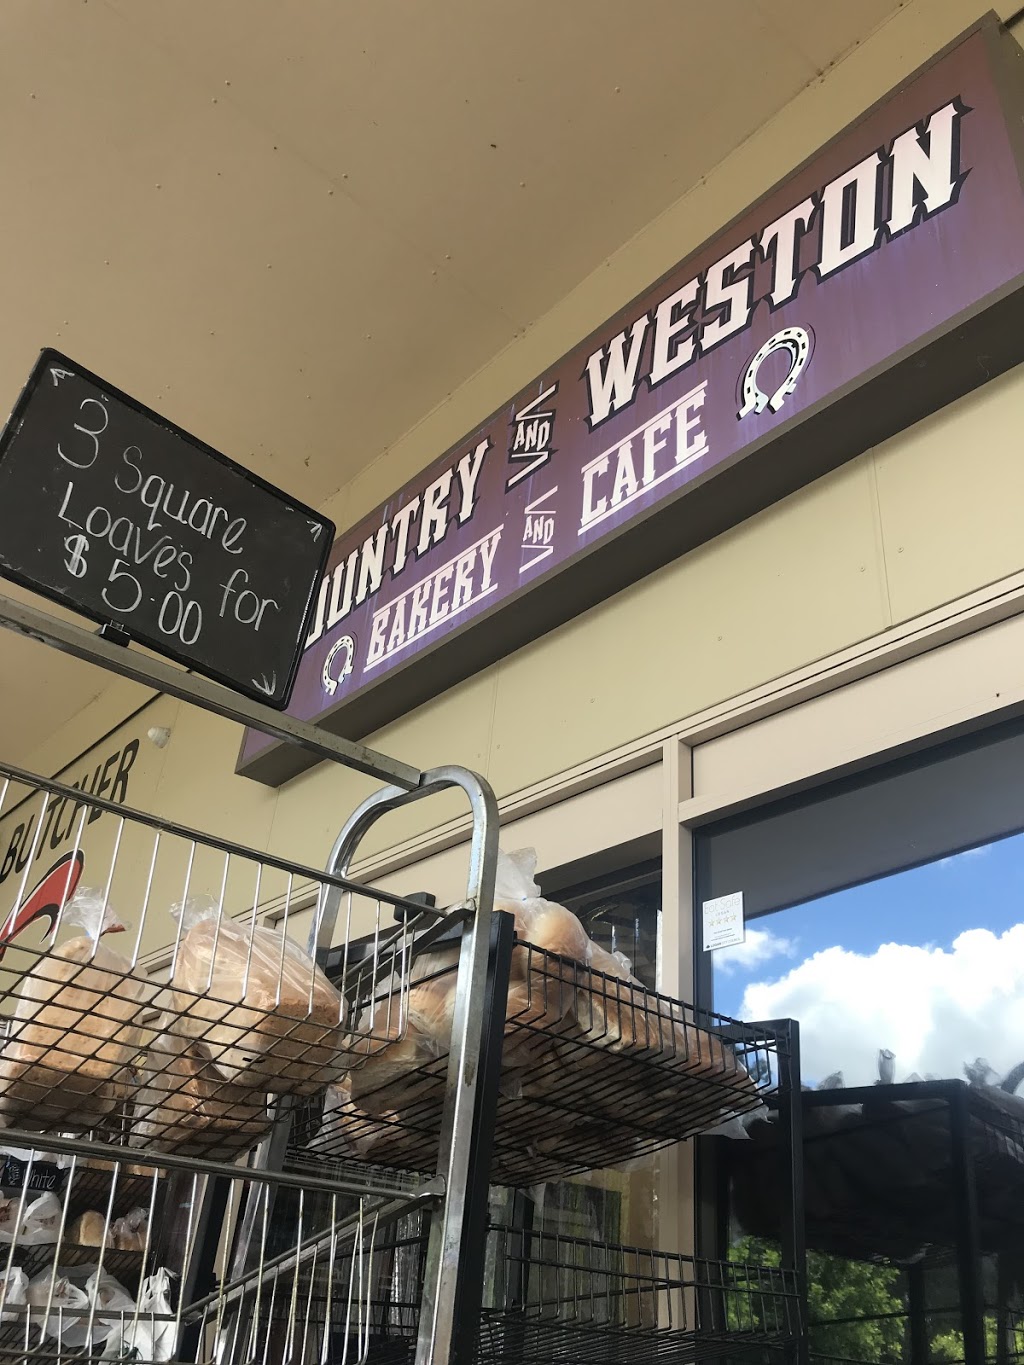 Country & Weston Bakery Cafe | bakery | Aldwyn Rd & Mt Lindsay Highway, Jimboomba QLD 4280, Australia | 0738021944 OR +61 7 3802 1944